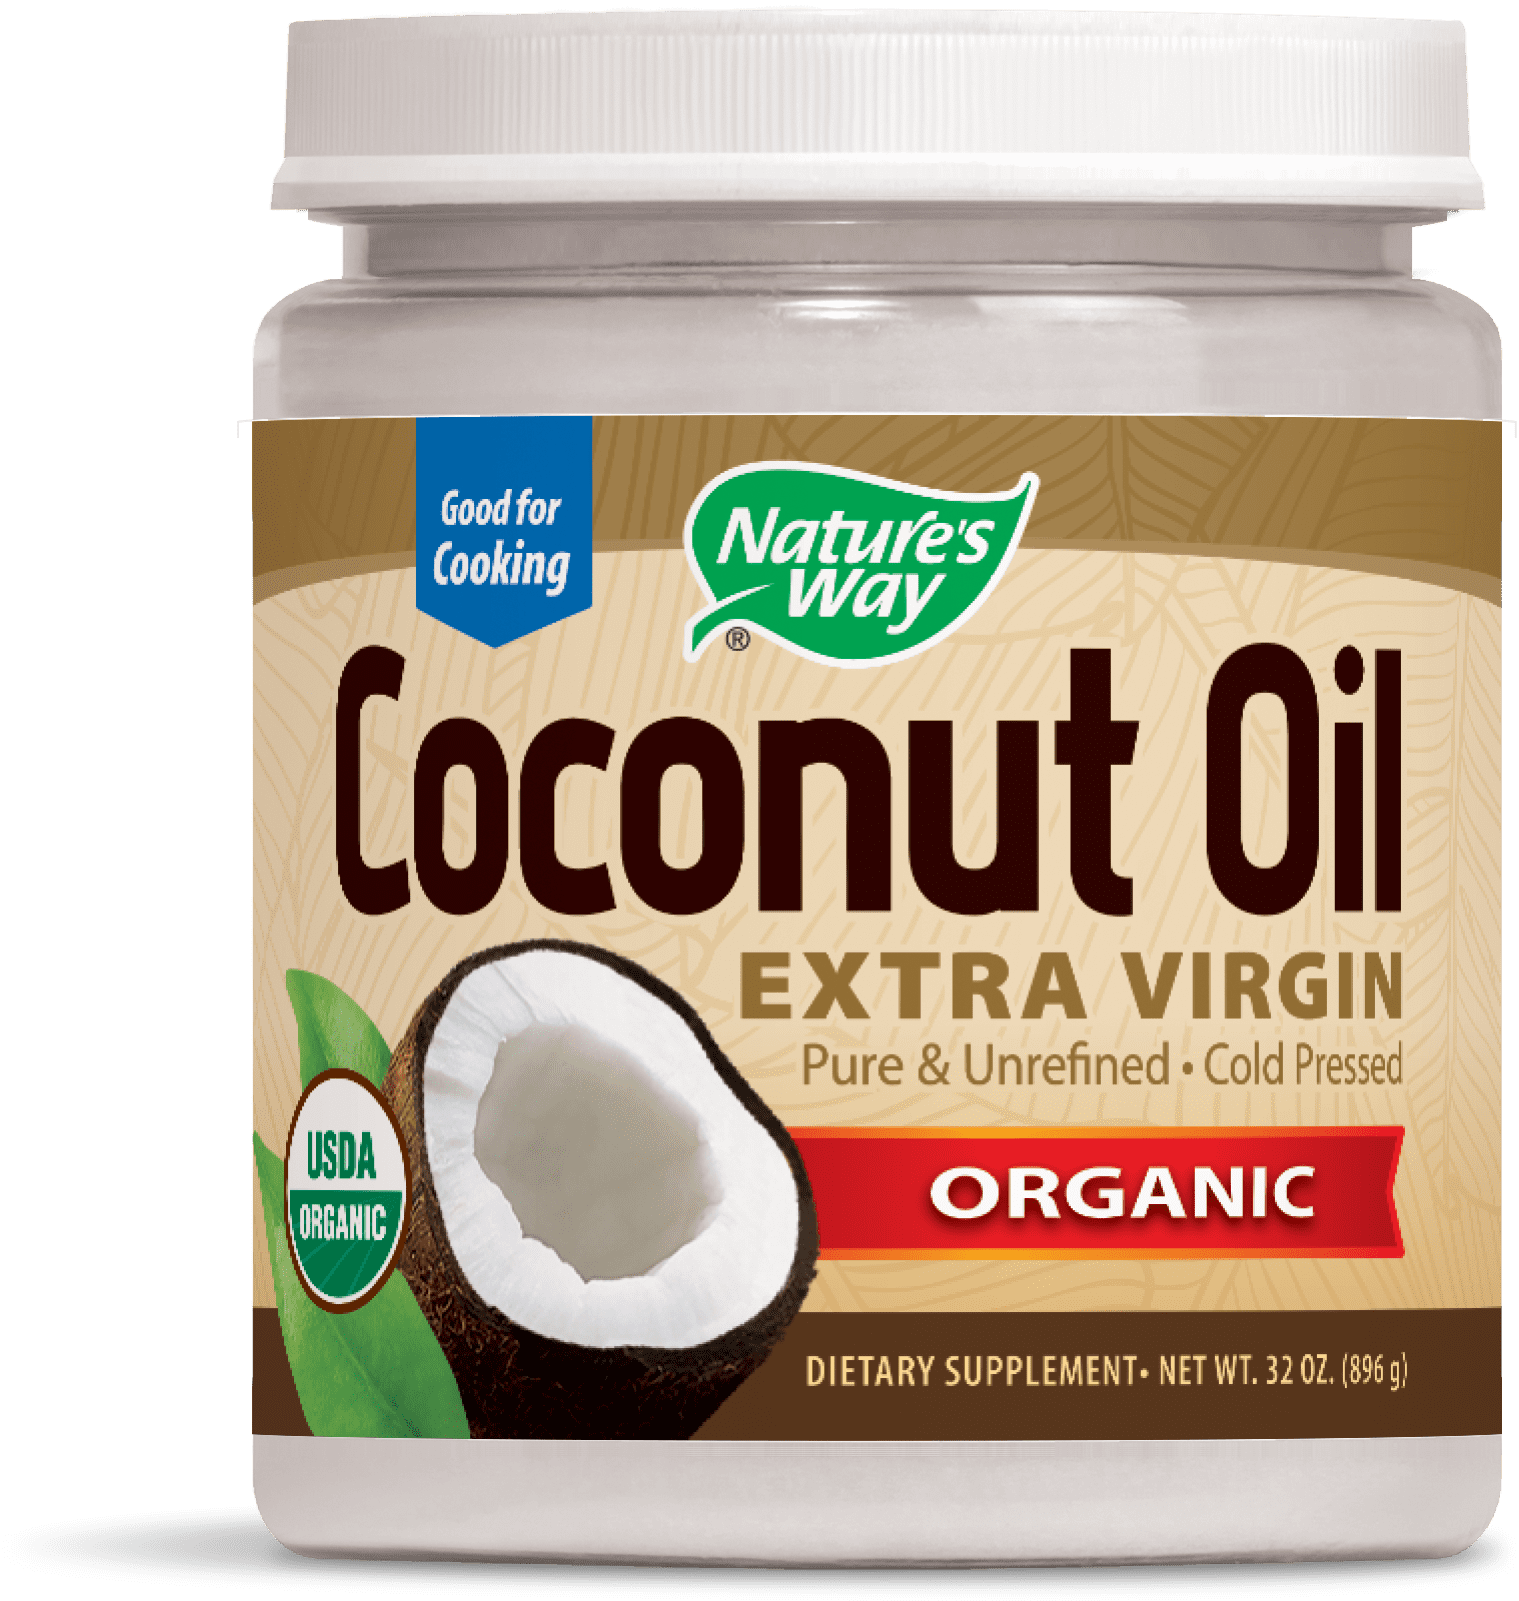 Virgin coconut oil cold press